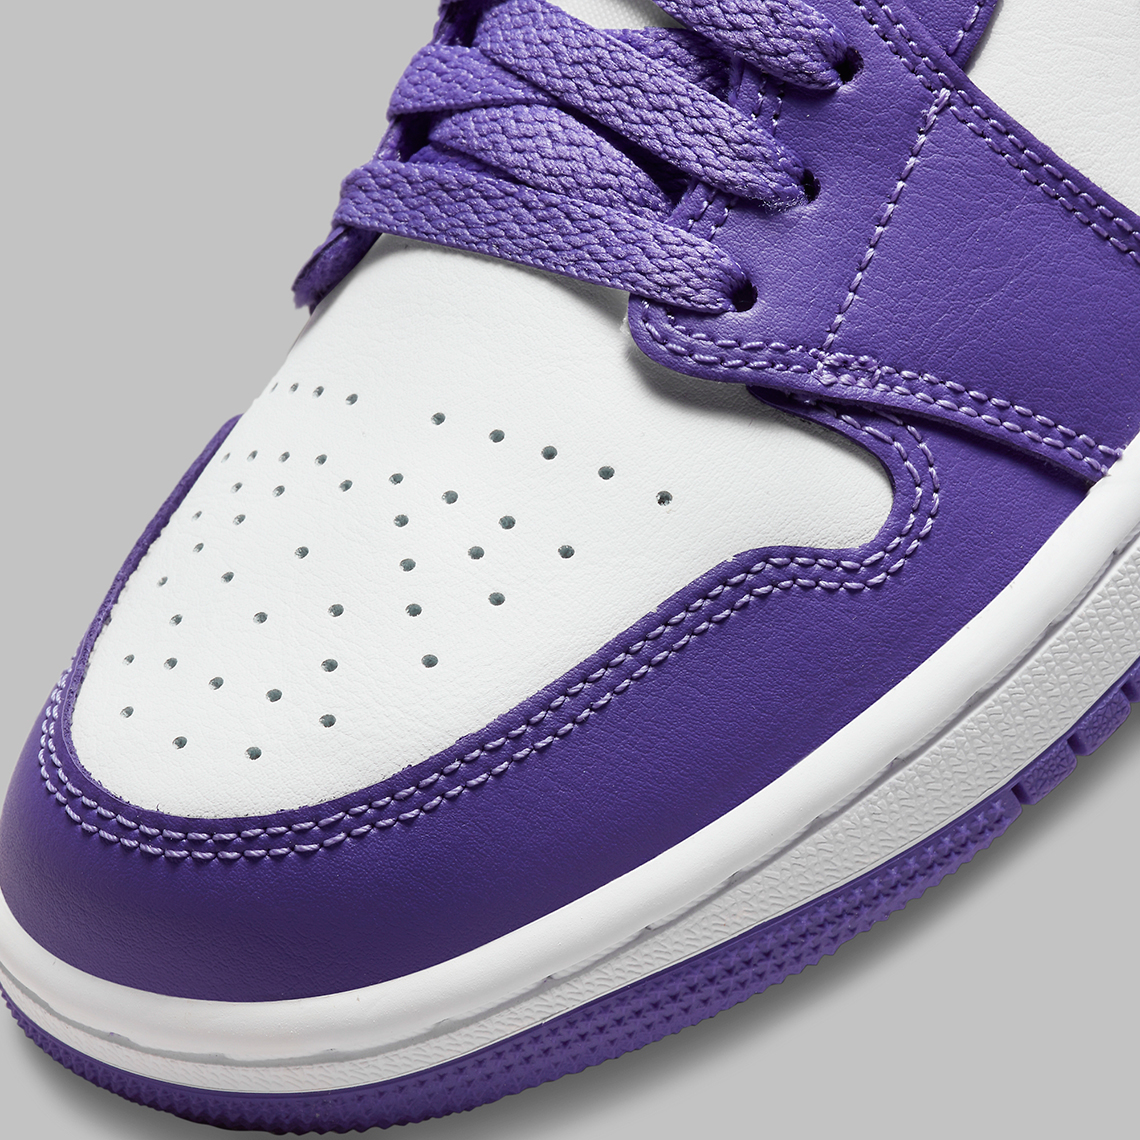 Air Jordan jordan 1 low womens 1 Low Women's Psychic Purple White | SneakerNews.com